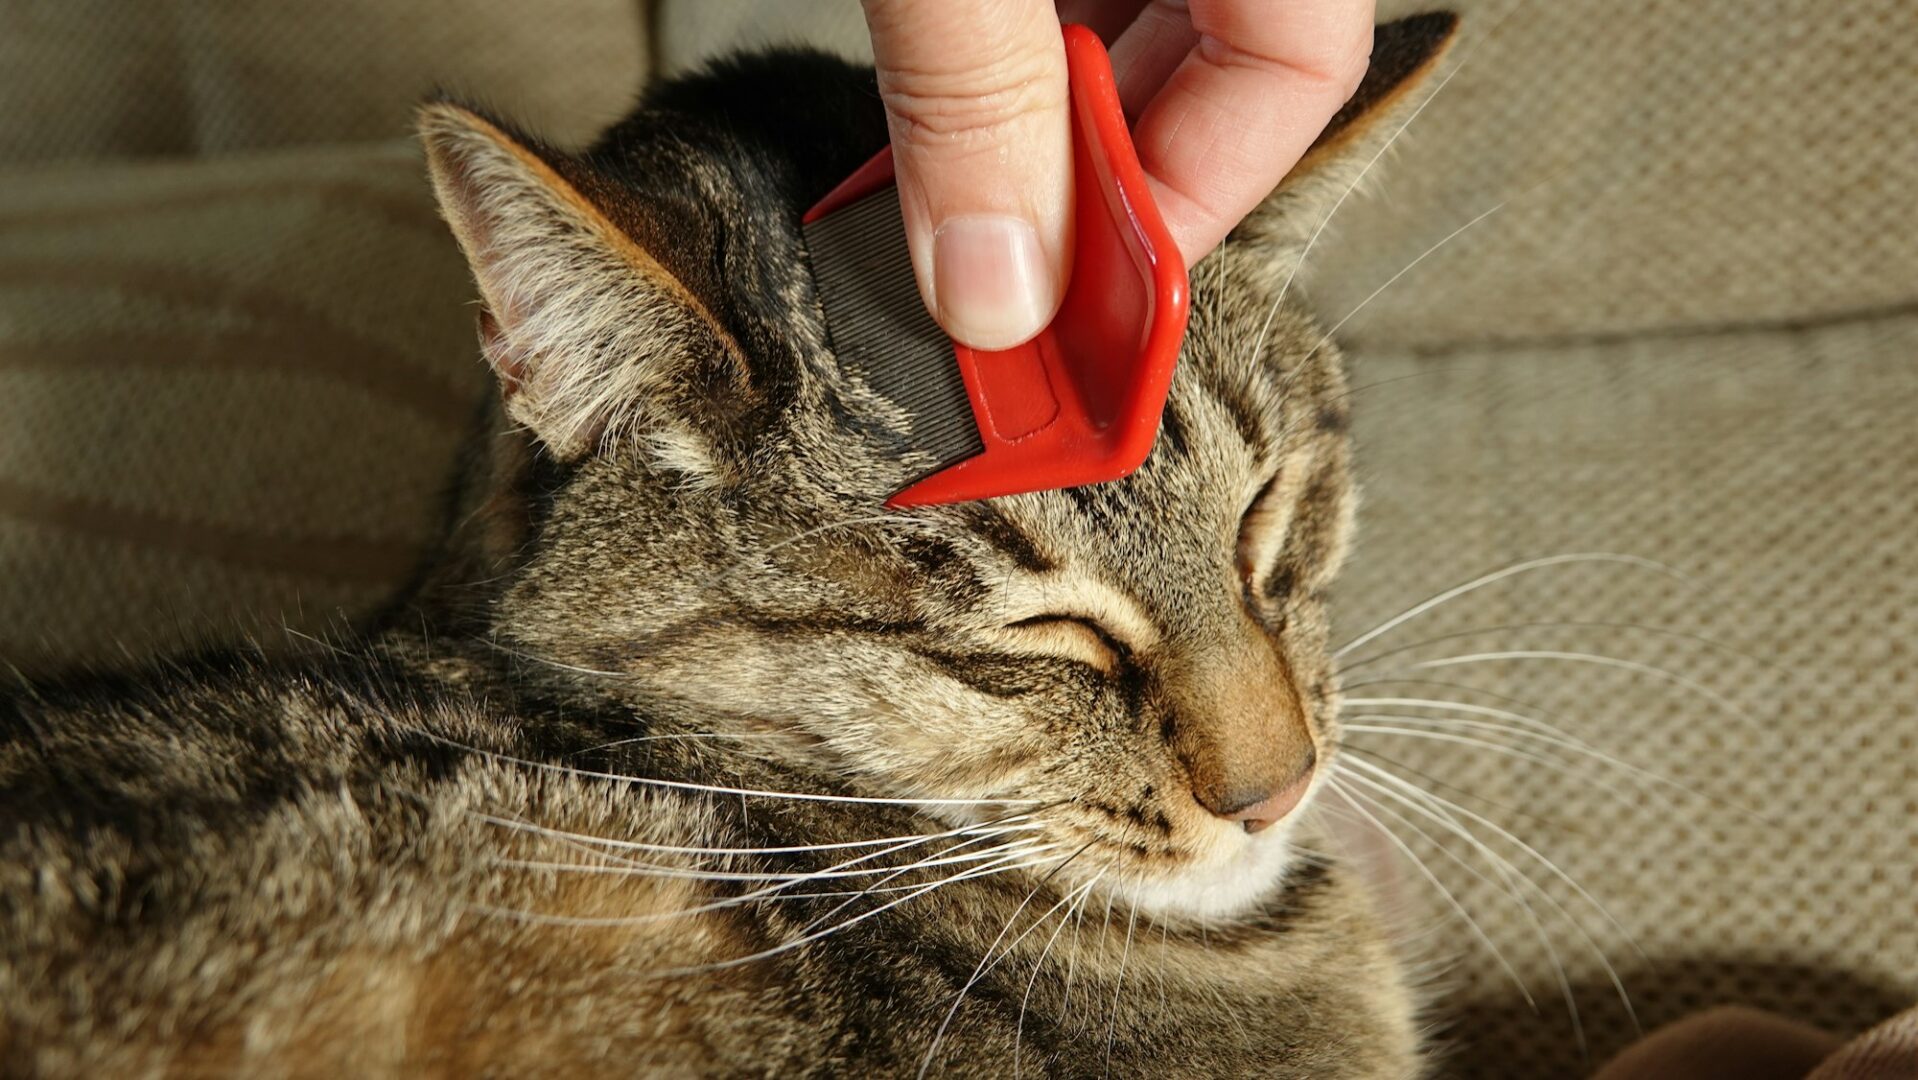 Closeup shot of a hand checking a cat for fleas with a flea comb